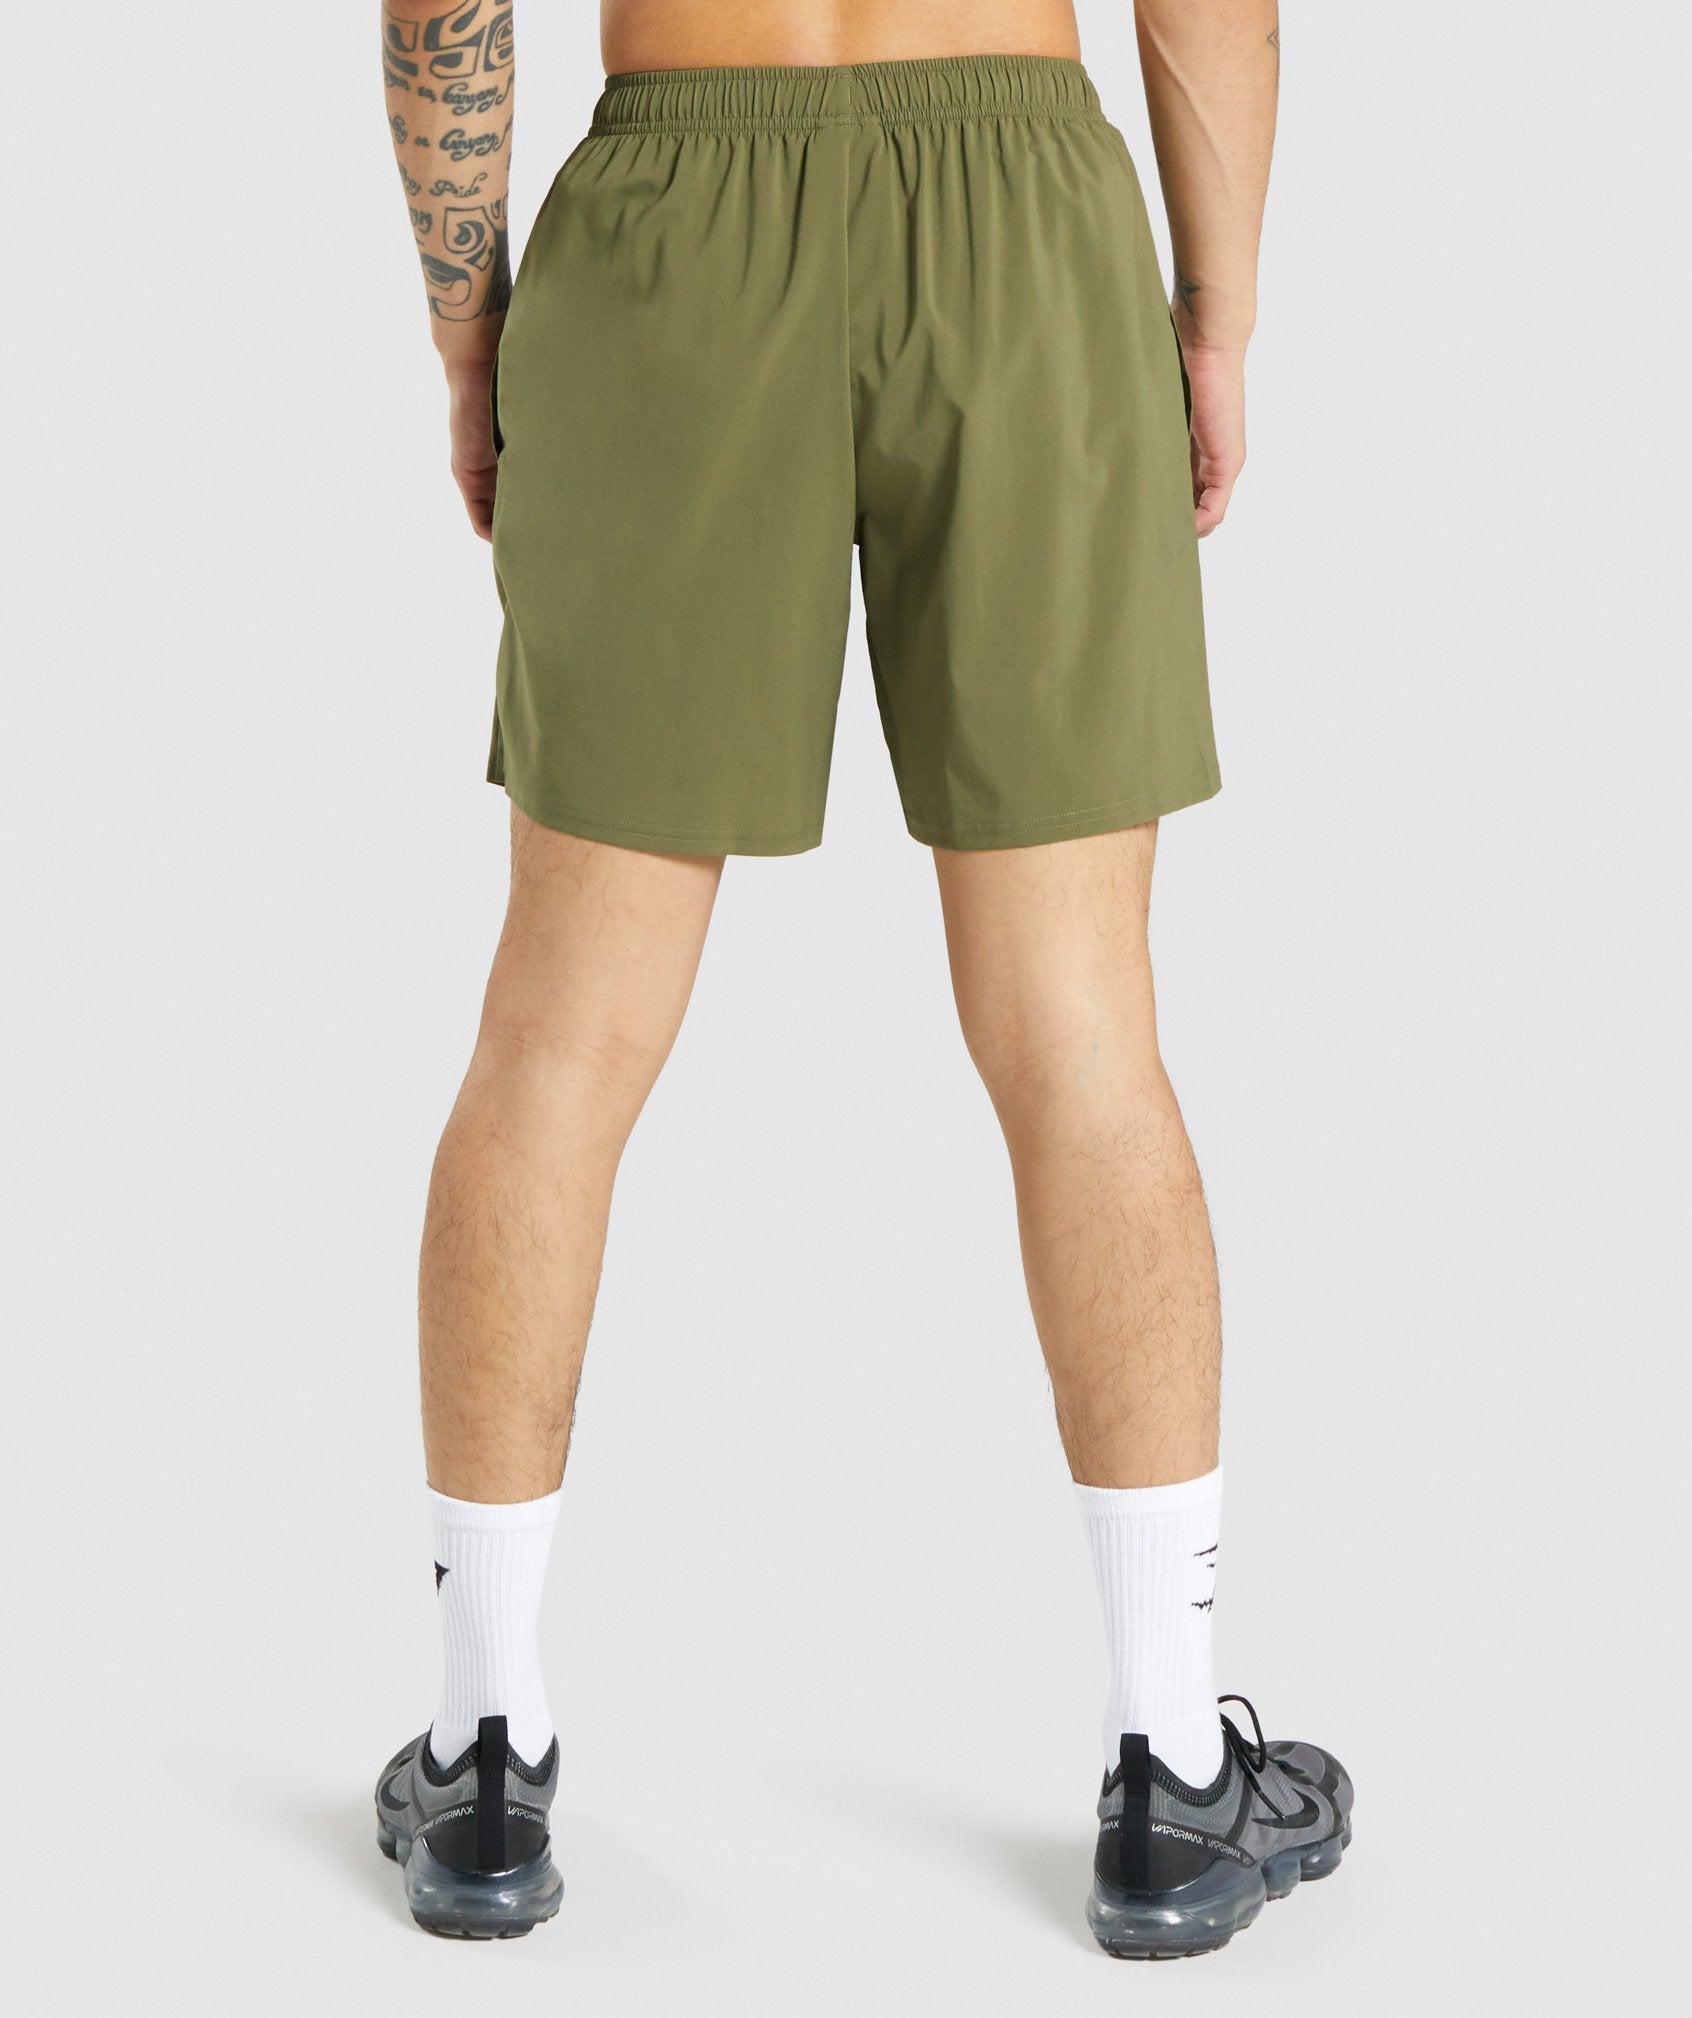 Gymshark mens small shorts - Gem